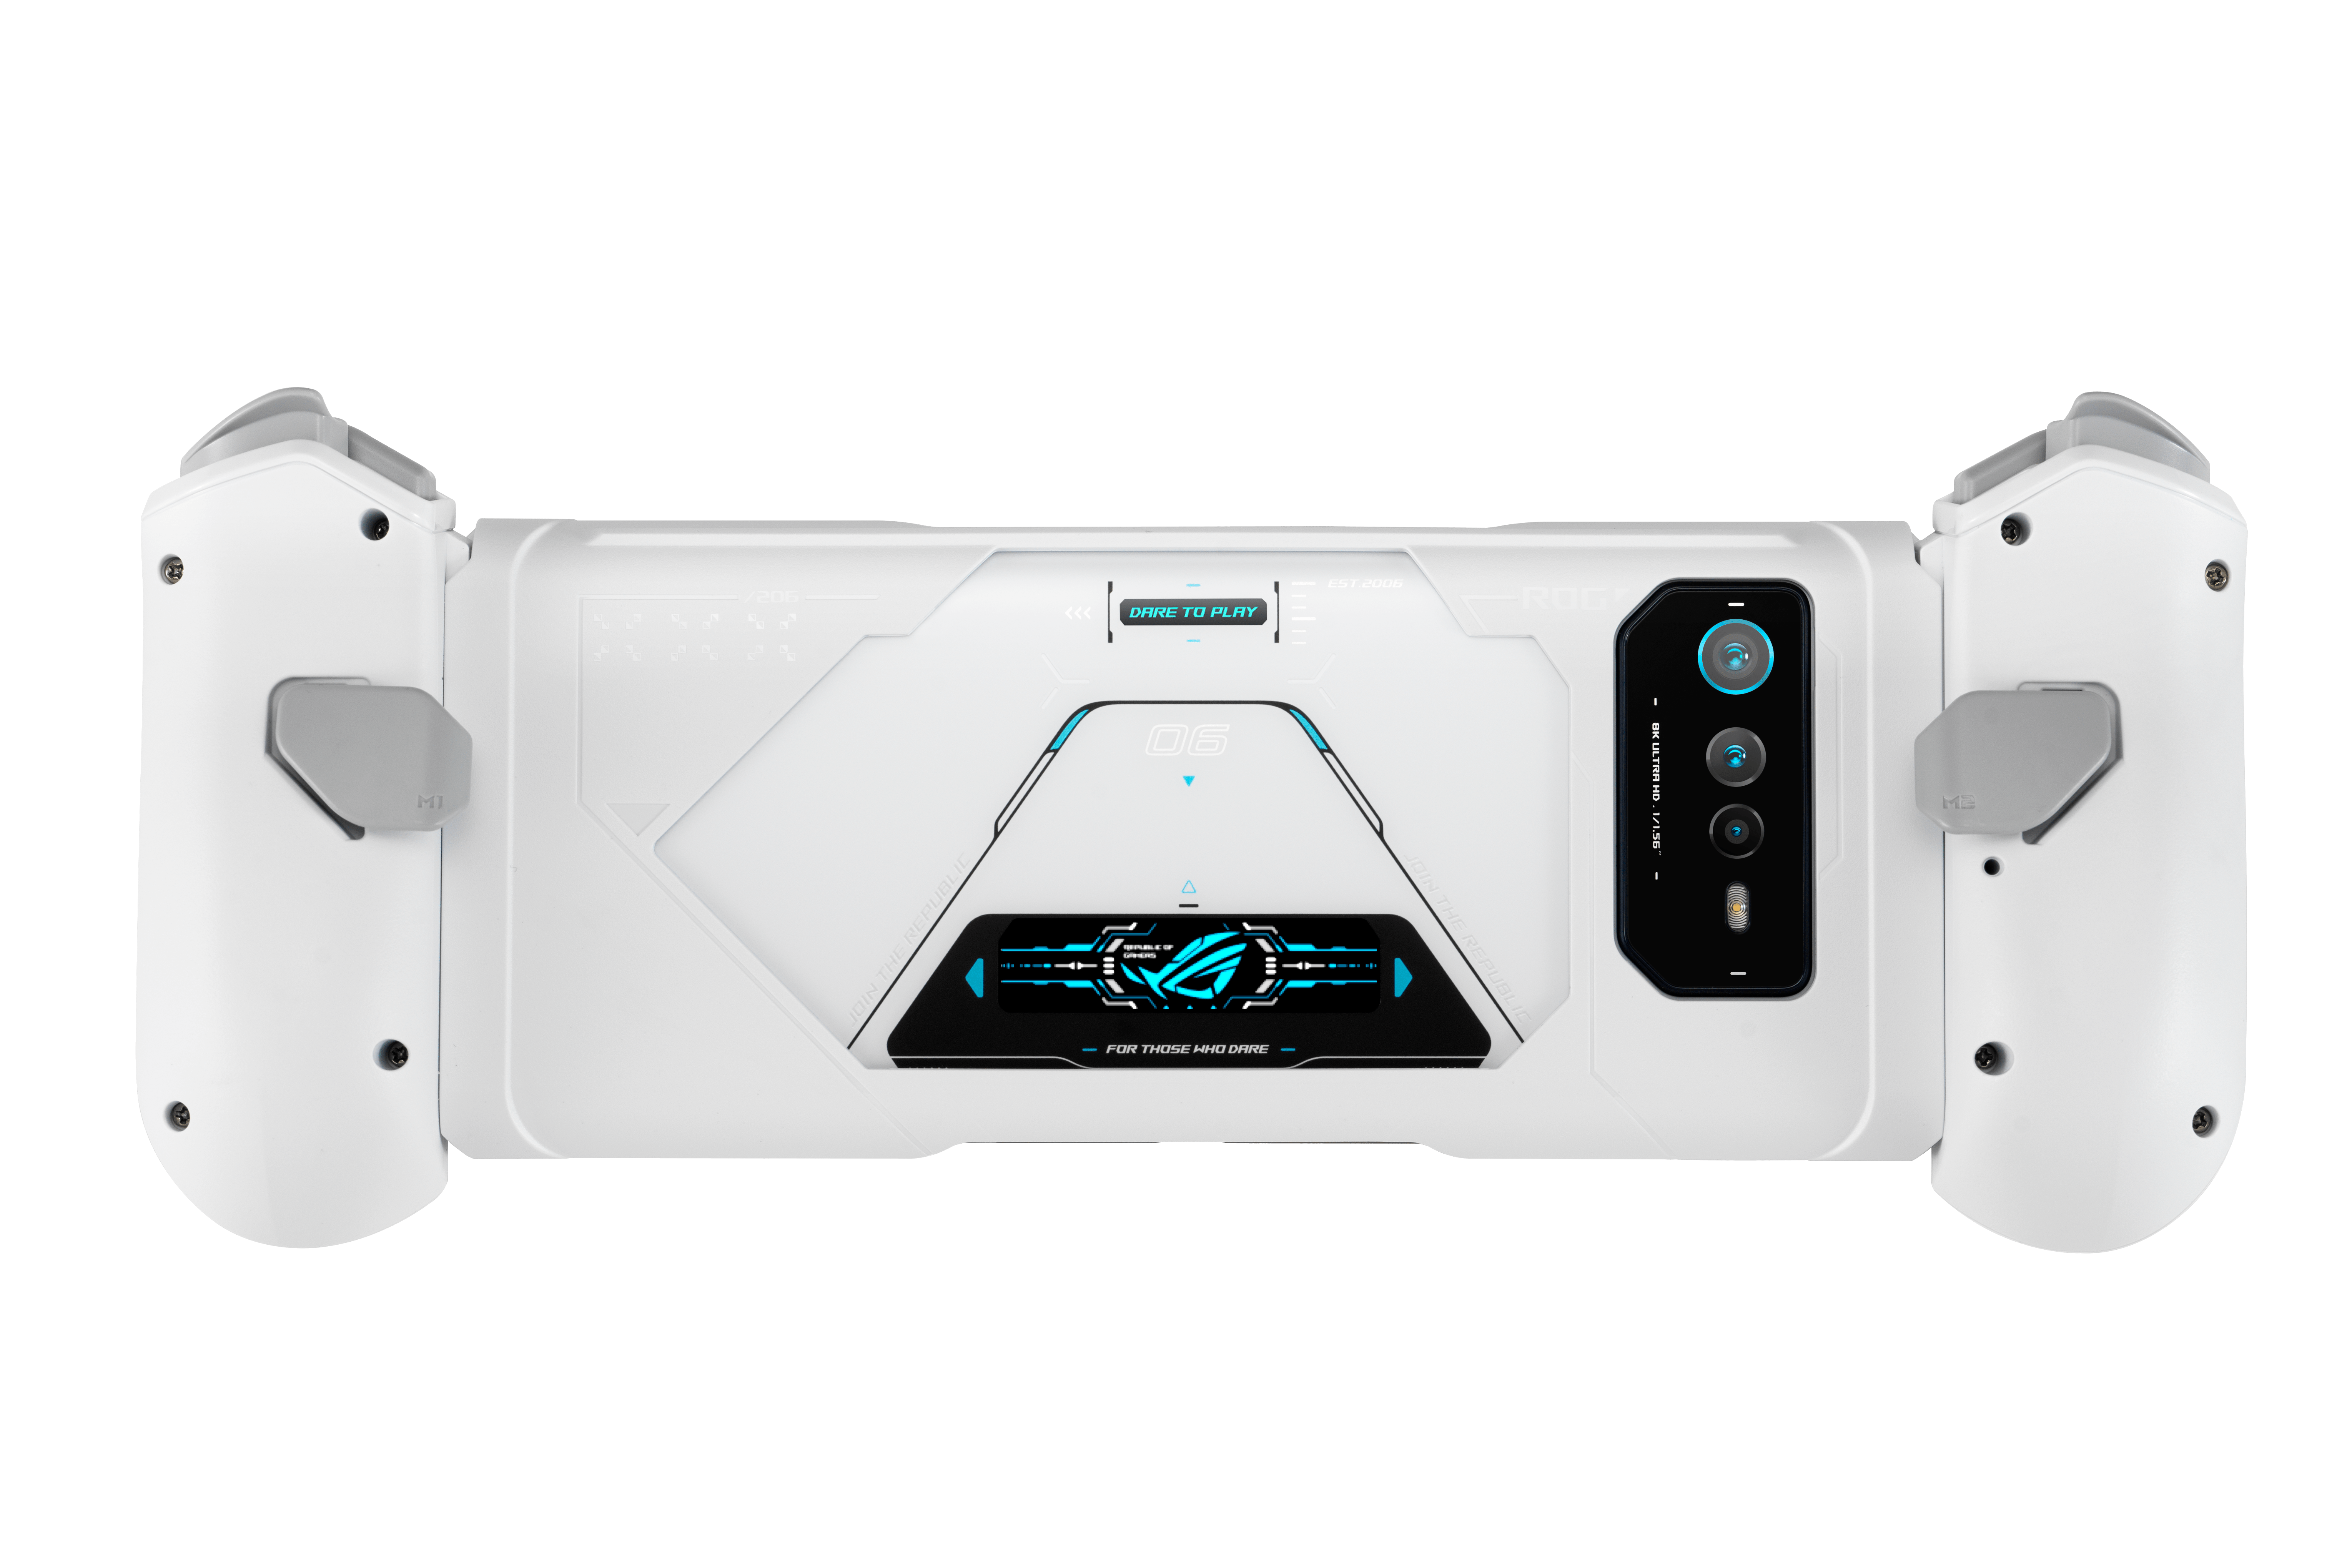 ROG kunai 2 02 | AeroActive Cooler 6 |  ASUS เปิดตัว ROG Phone 6 และ ROG Phone 6 Pro เกมมิ่งสมาร์ทโฟนที่แรงที่สุดในโลกด้วยหน่วยประมวลผล Qualcomm Snapdragon 8+ Gen 1